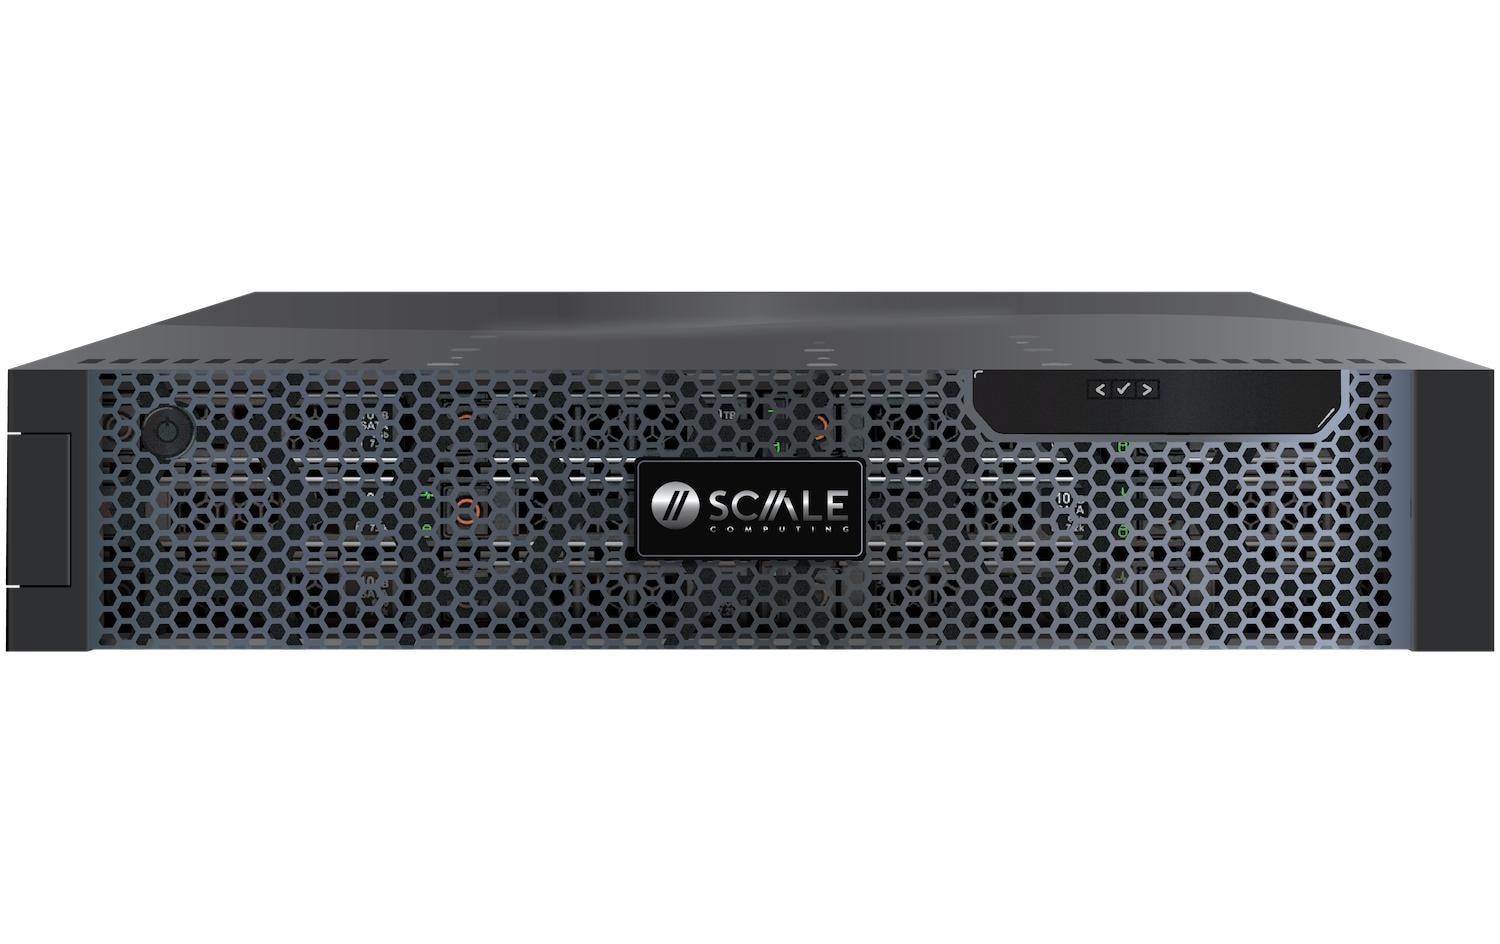 Scale Computing HC5250D-V (Hybrid) XS-4210R, 2.4GHz,192GB (12x16GB)